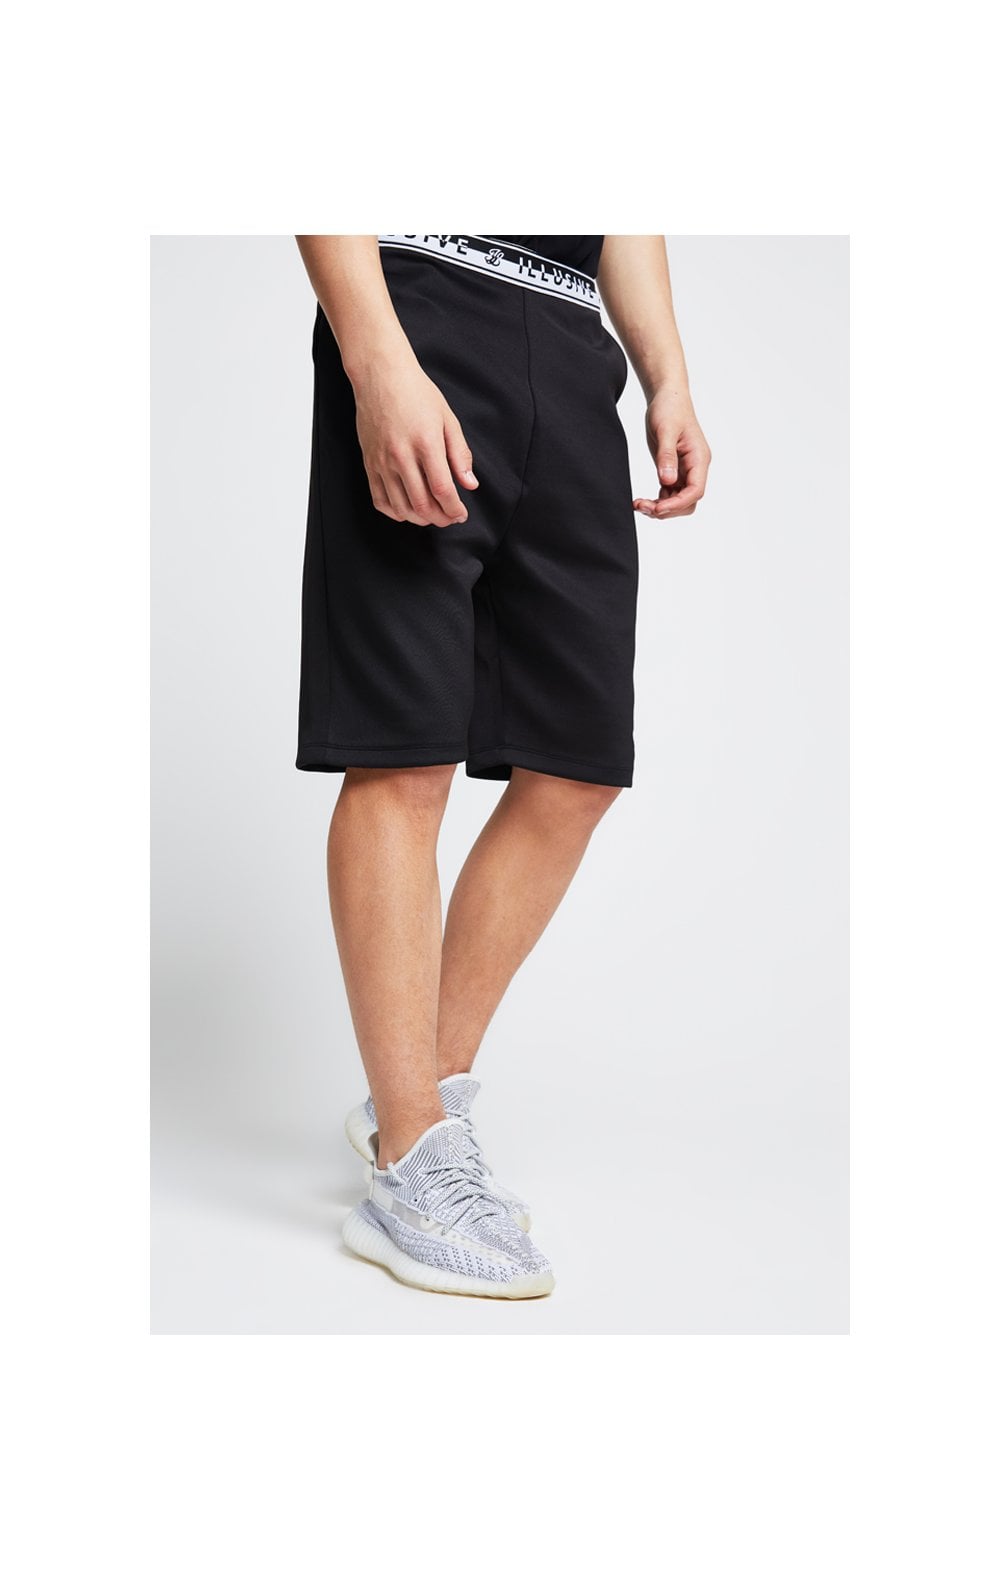 Illusive London Tape Jersey Shorts - Black (1)